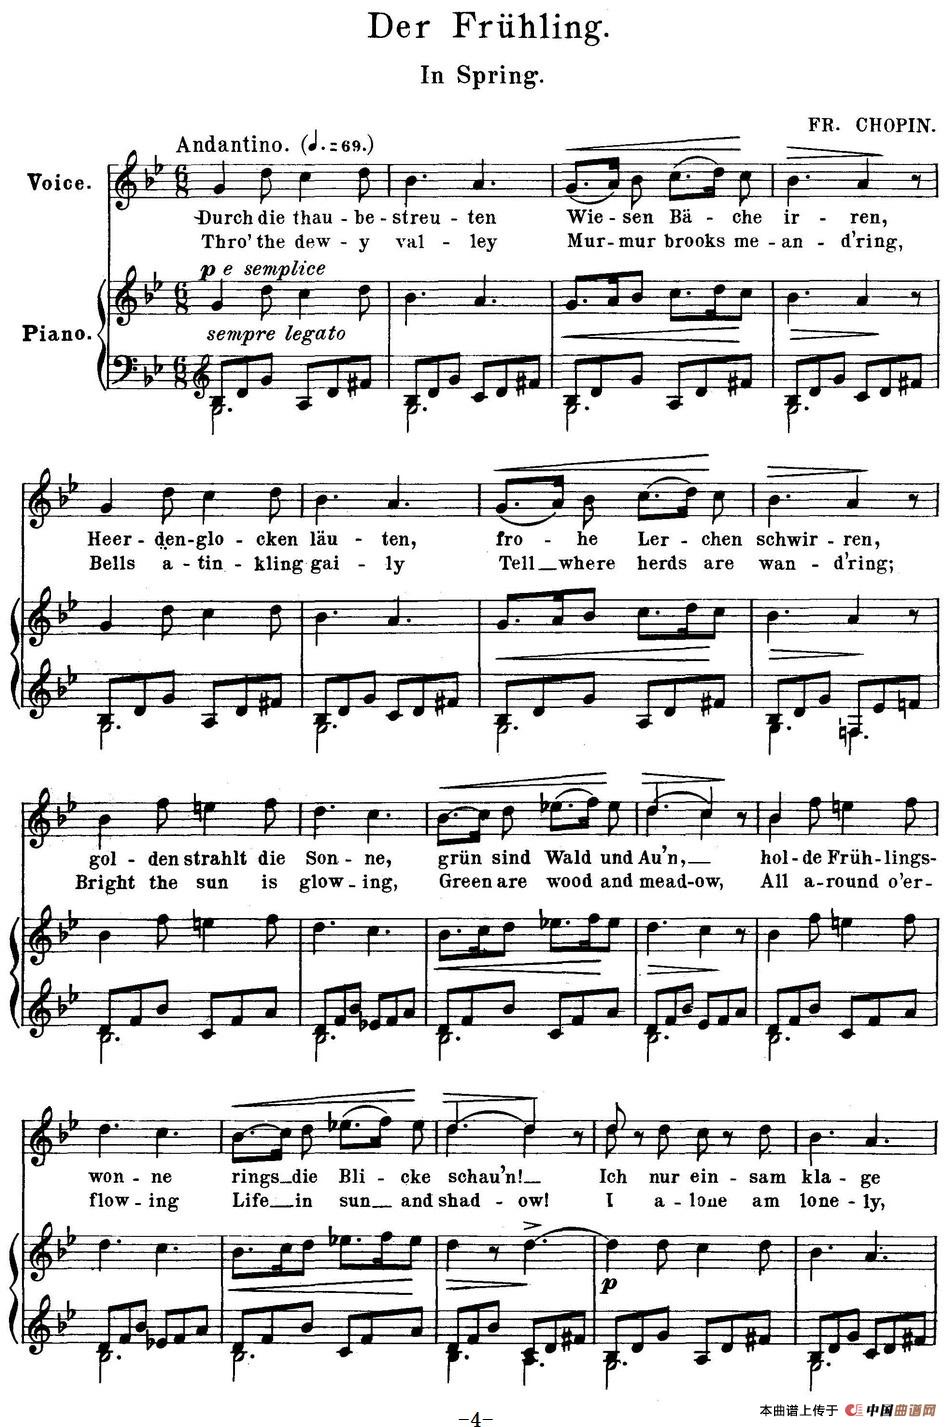 Chopin-17 Polish Songs Op.74，No.2（Der Fruhling. In Spring